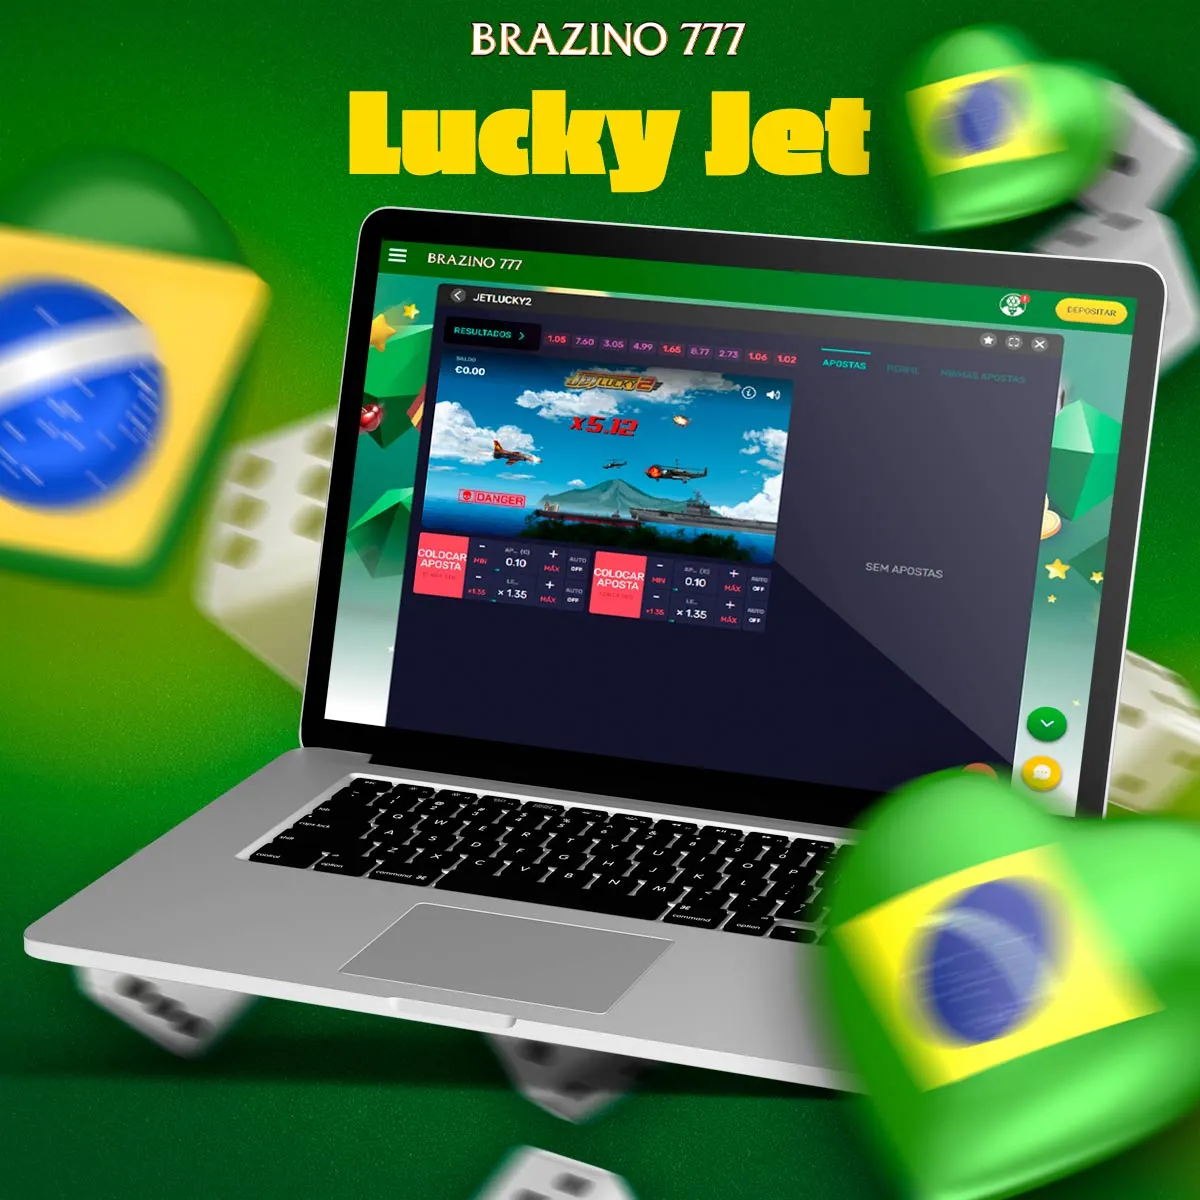 O popular jogo Lucky Jet Brazino777